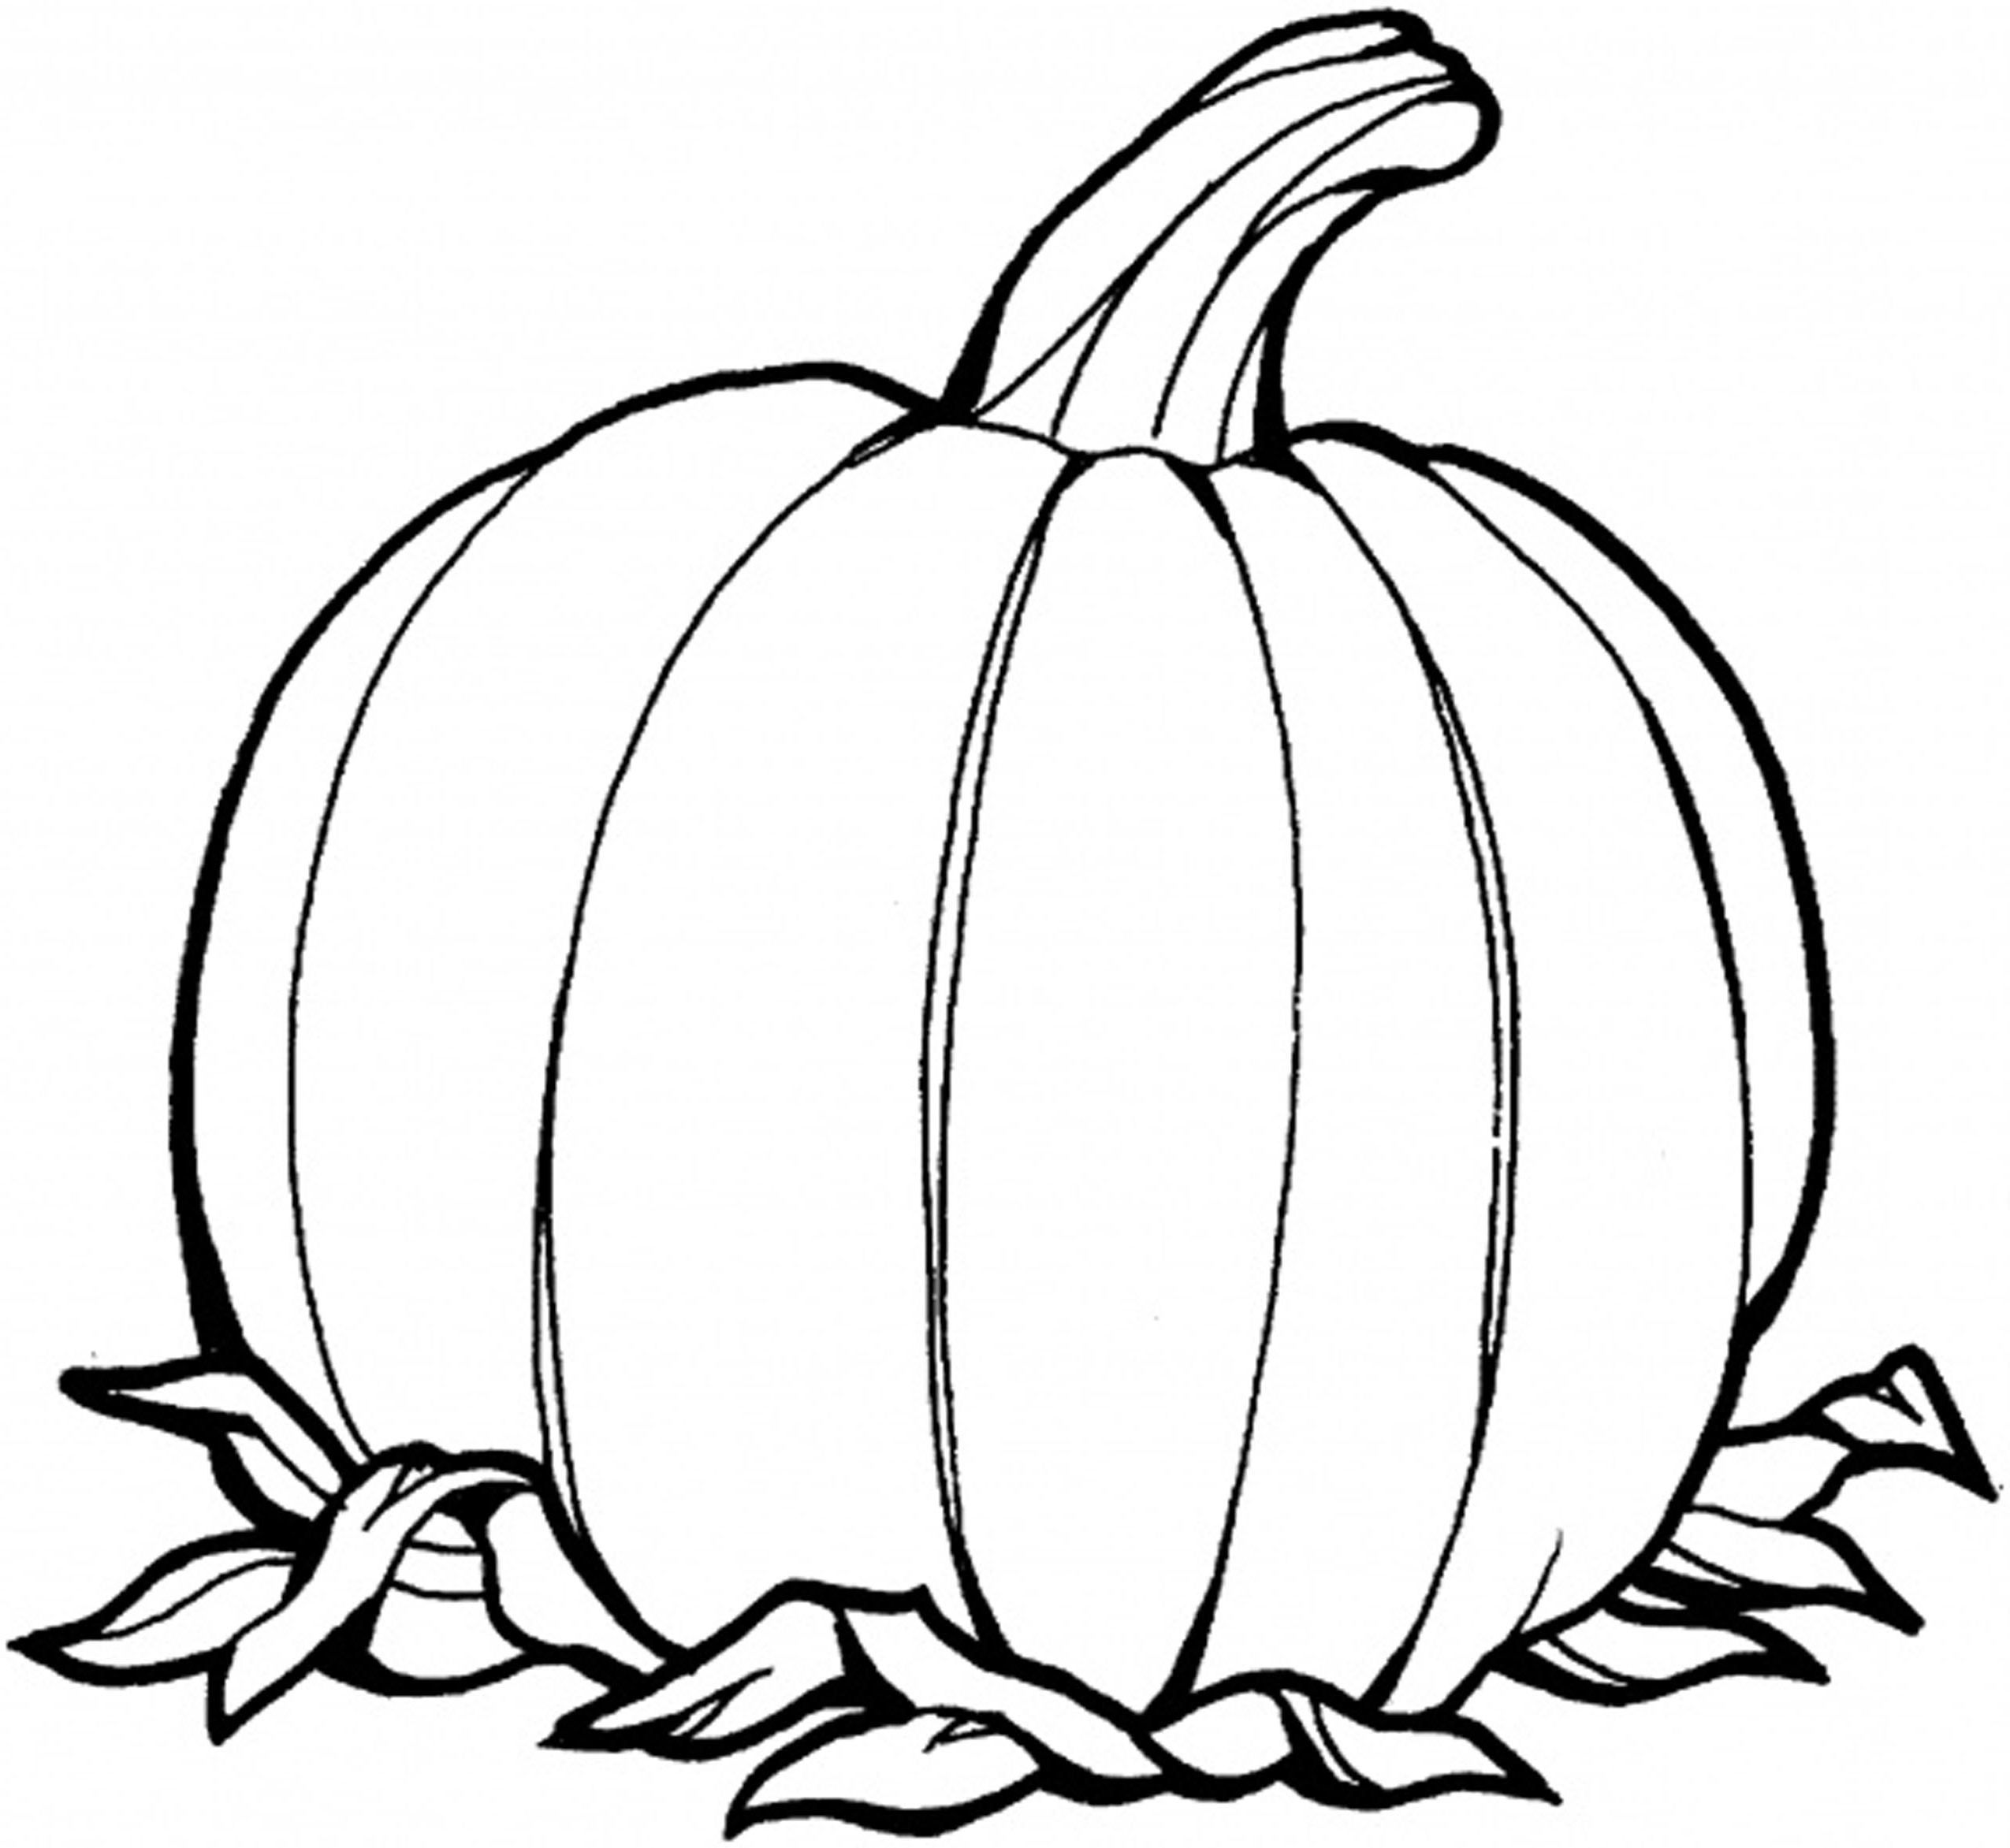  Pumpkin Coloring Pages Templates - Blank Pumpkin